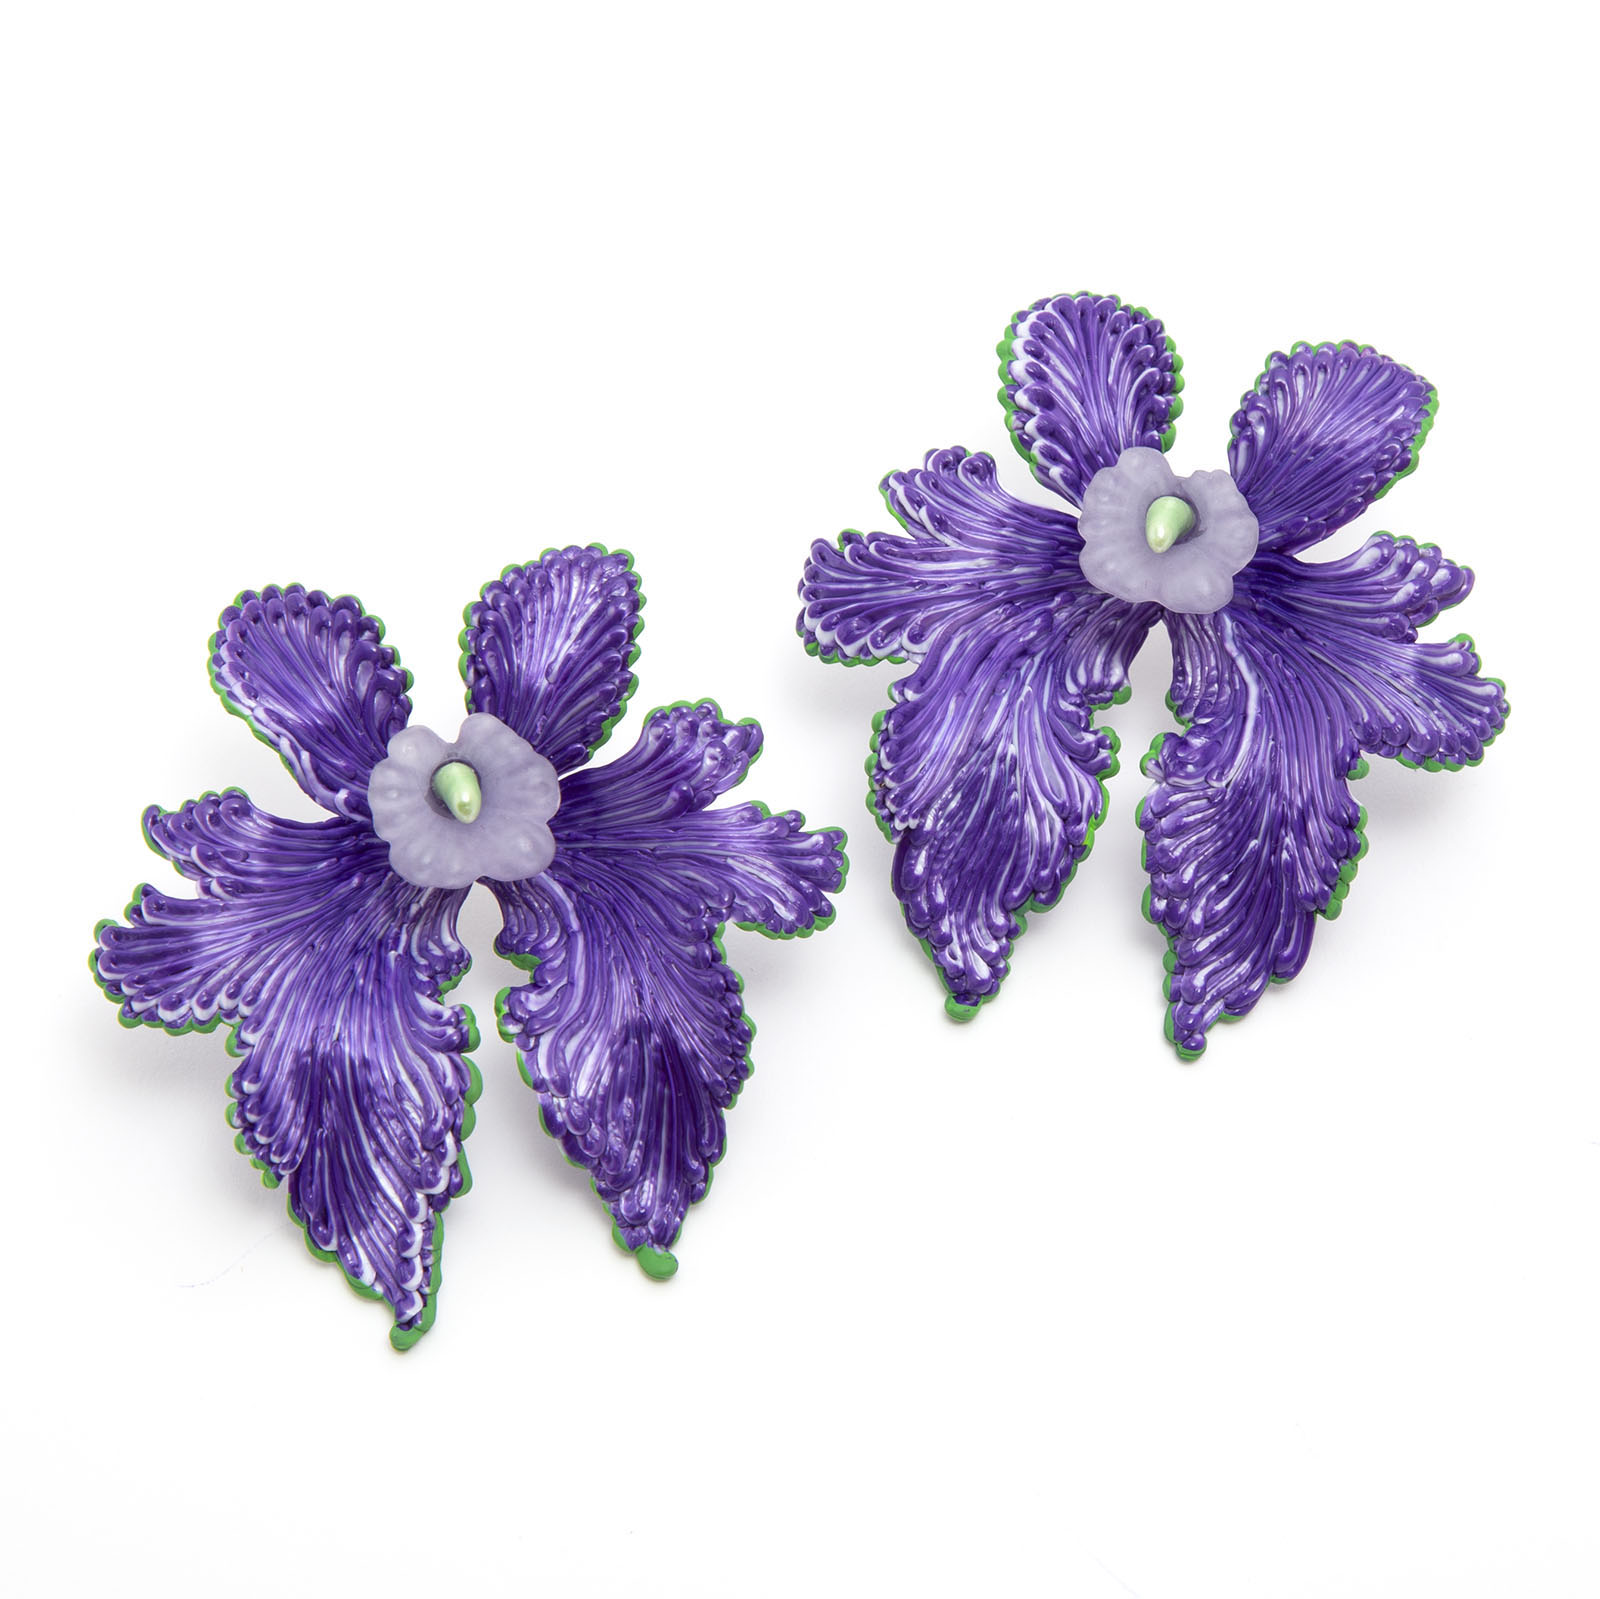 For When We Flourish – Swallowtail (Purple, silver, green)